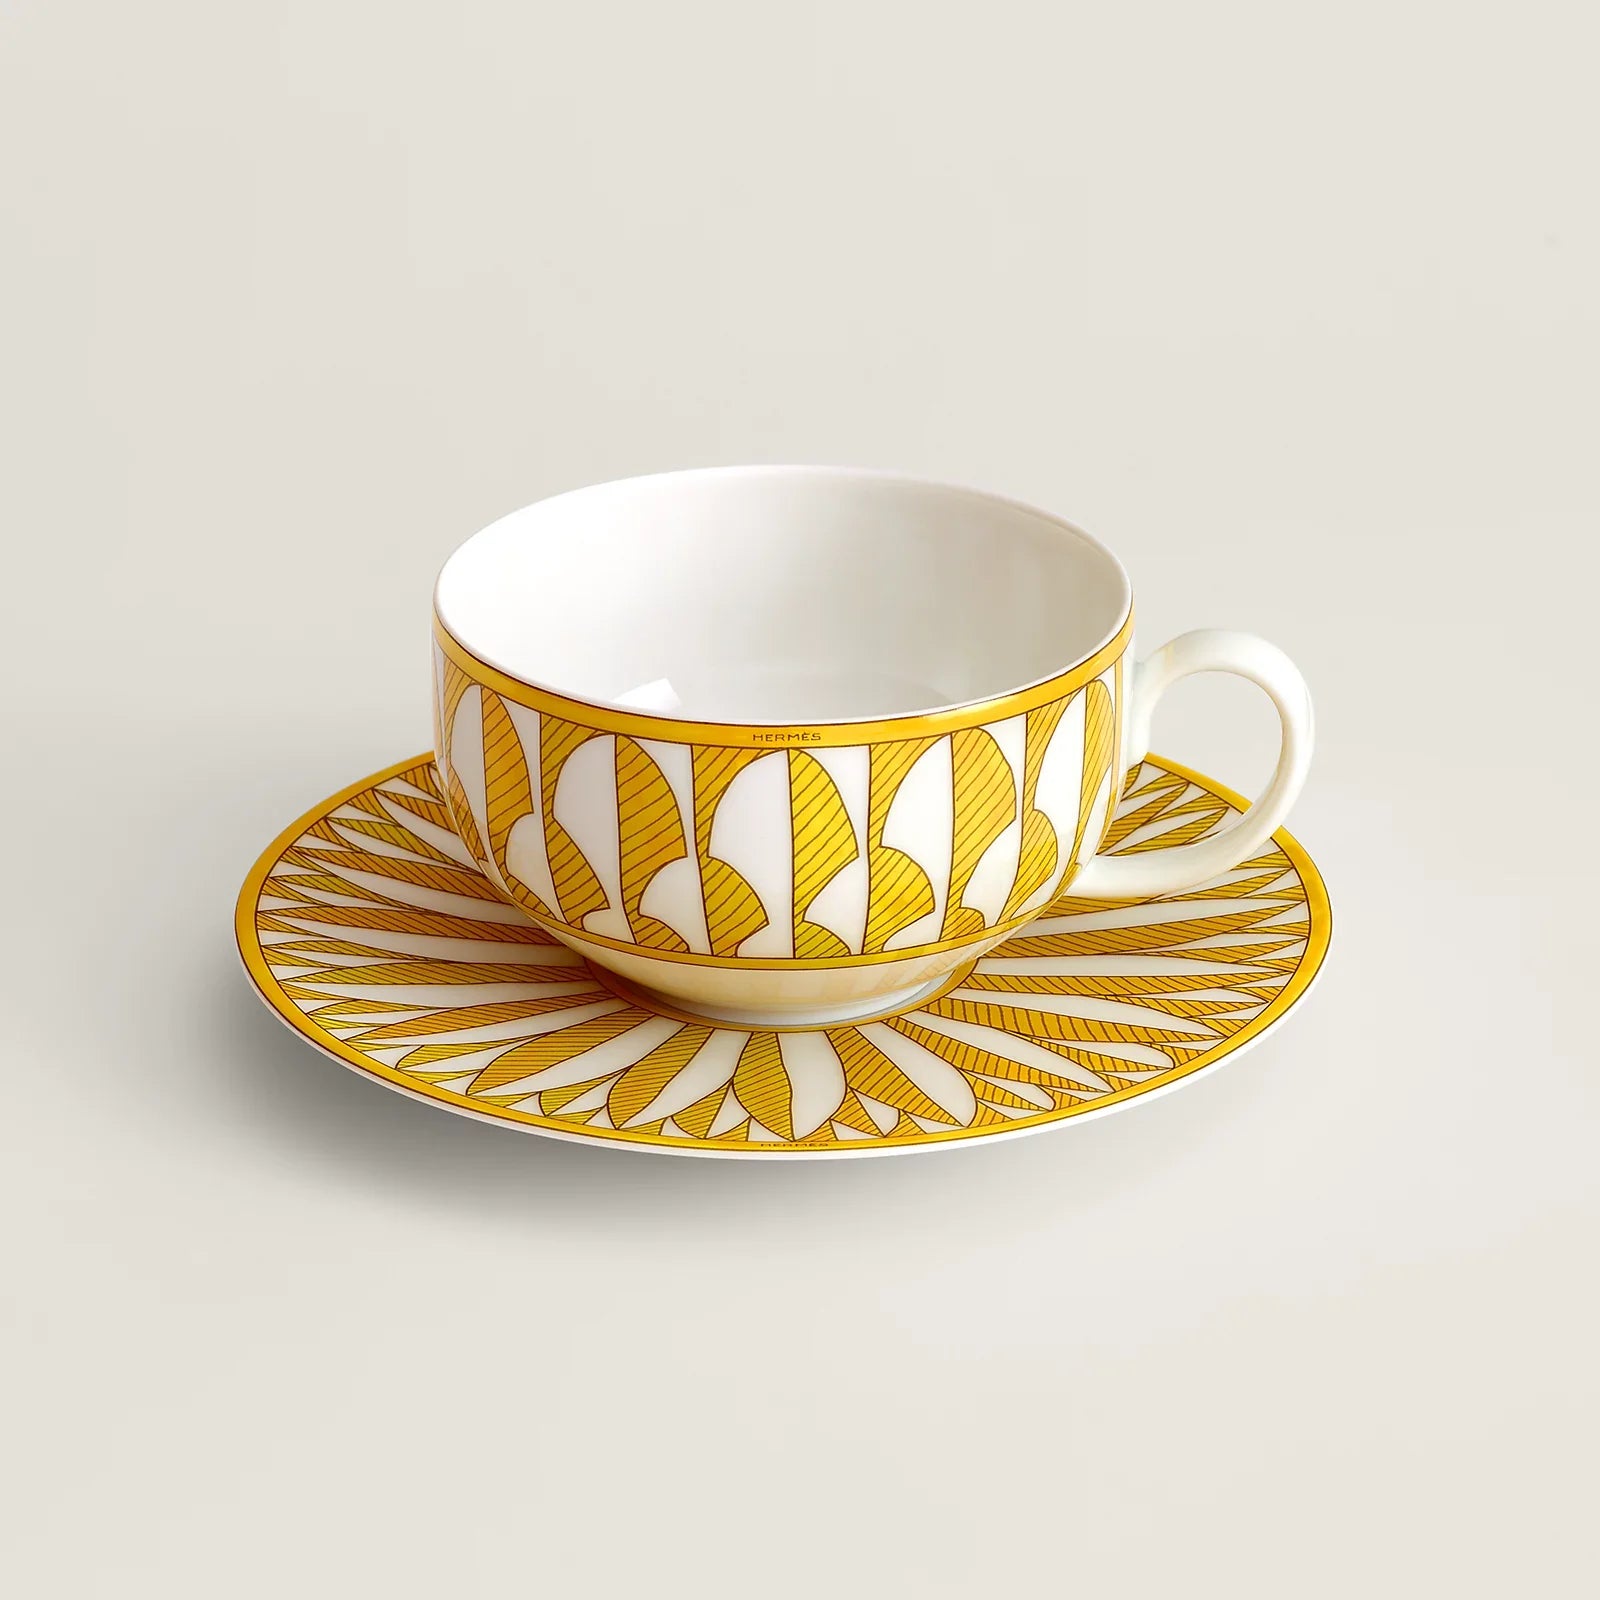 Soleil d'Hermès tea cup and saucer